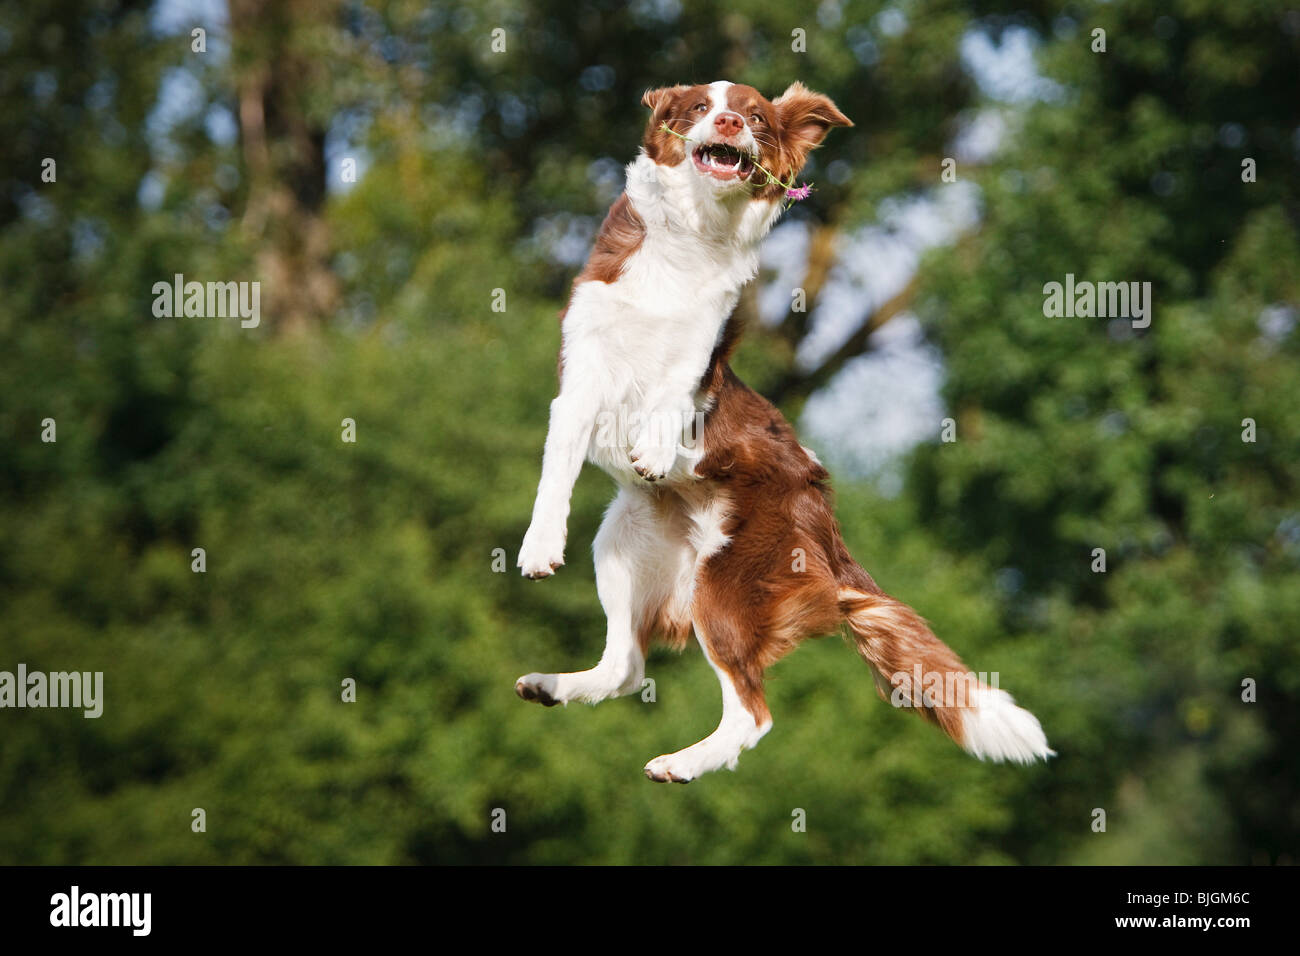 Australian Shepherd dog jumping Stock Photo